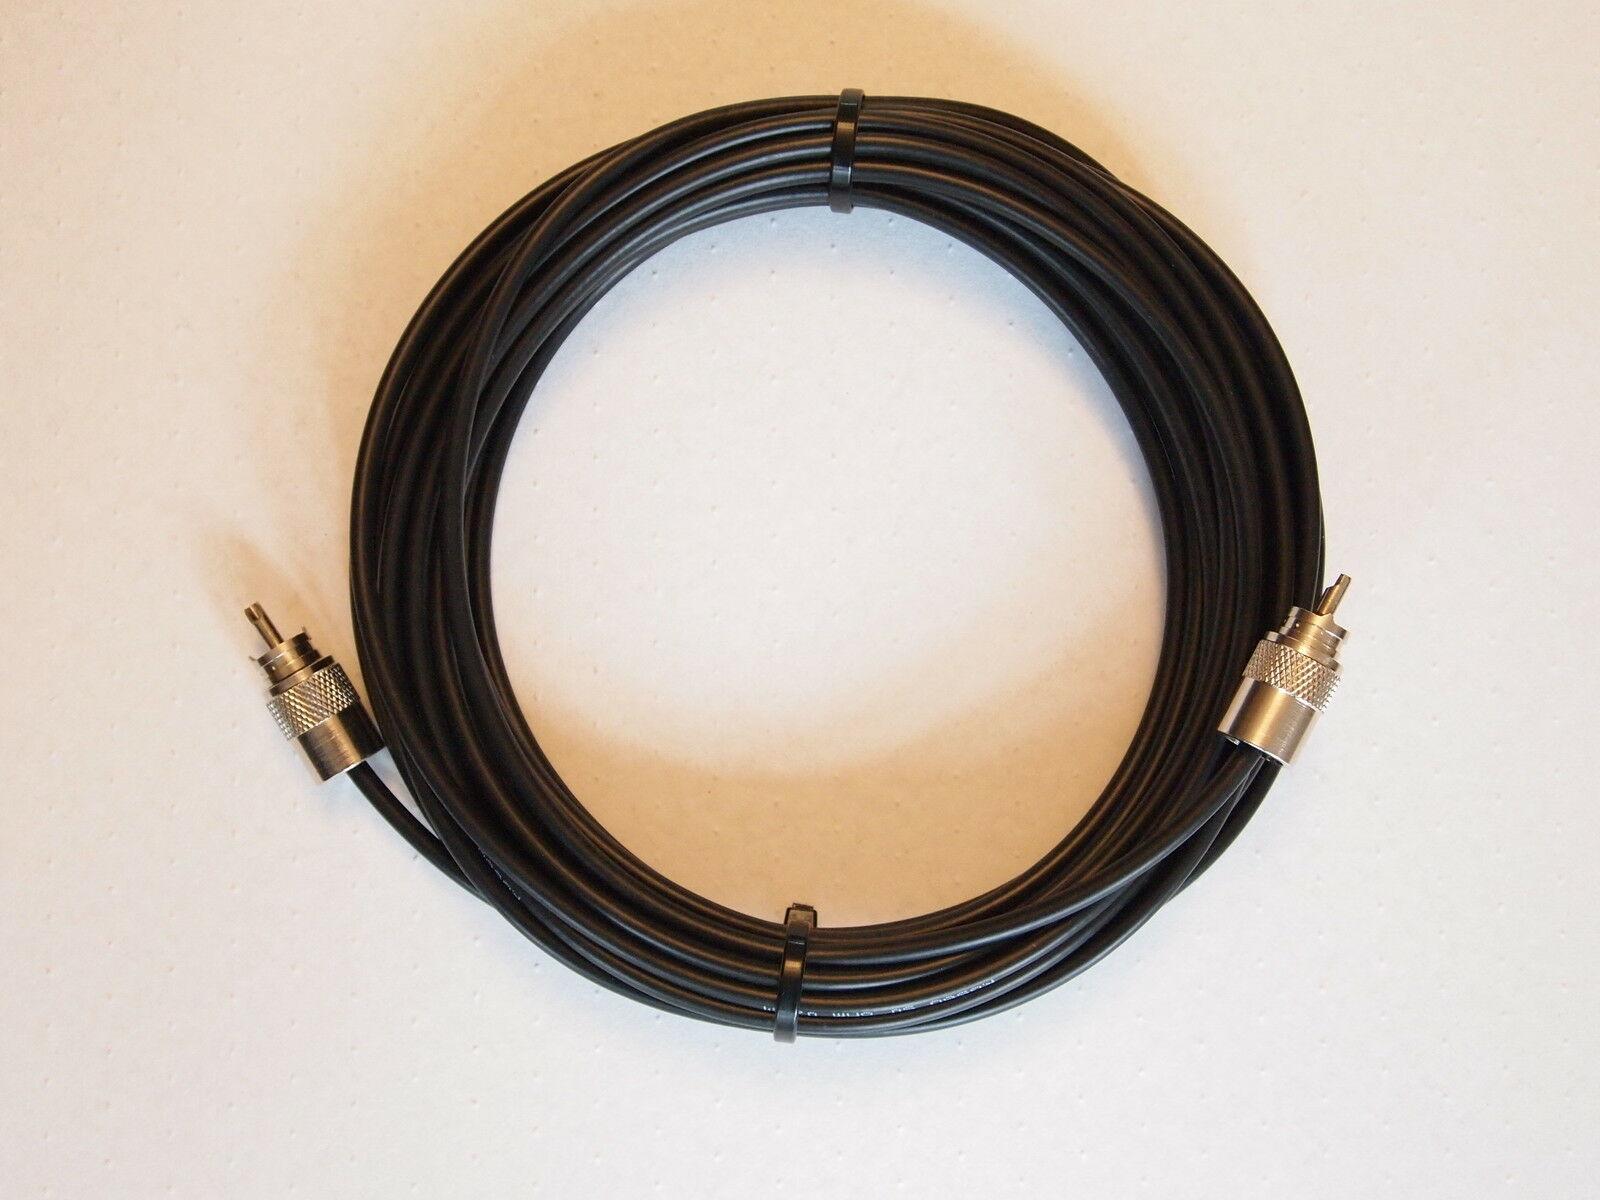 Sigma RG-58 Military Spec Coax cable 10 Metre Lead 2 x PL259  Male Connectors